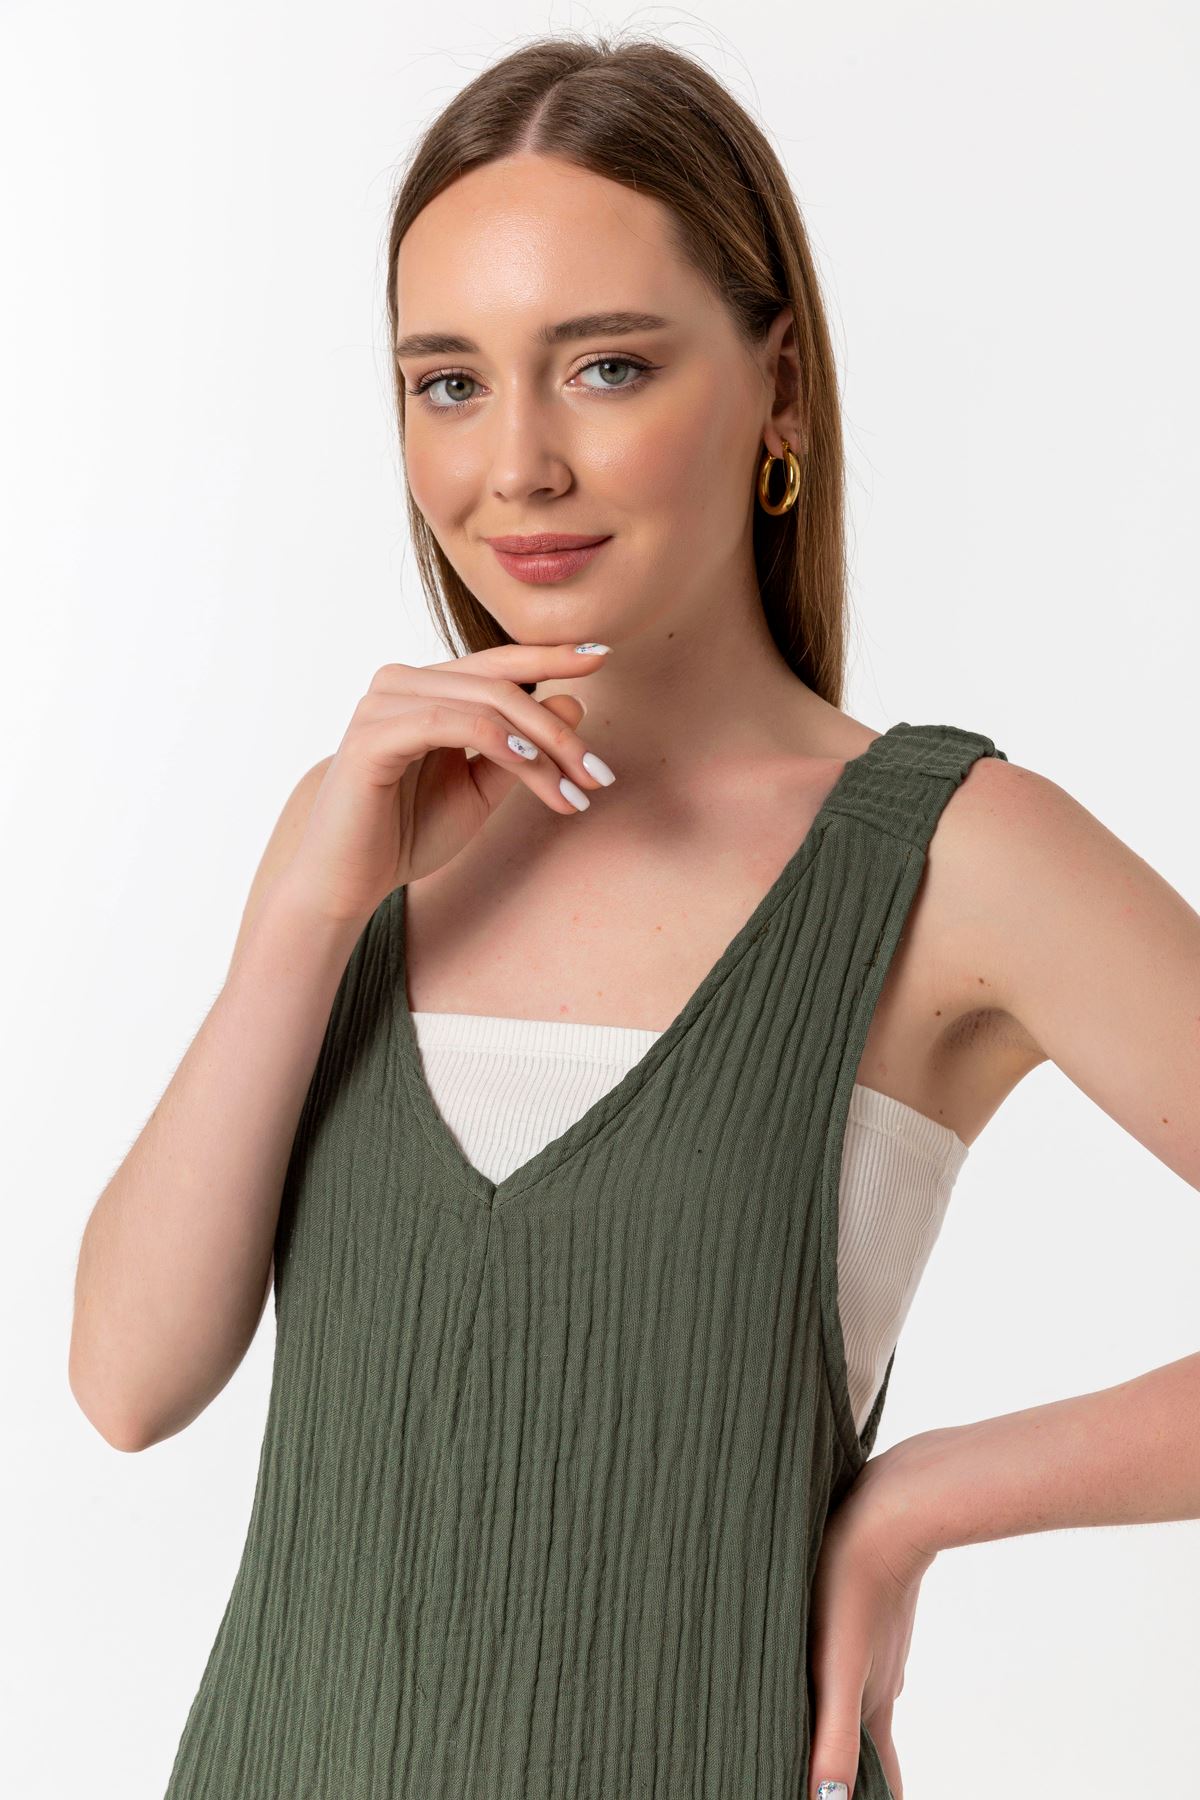 Licra Fabric V-Neck Maxi Wide Pattern Back Pocket Women Overalls - Khaki 